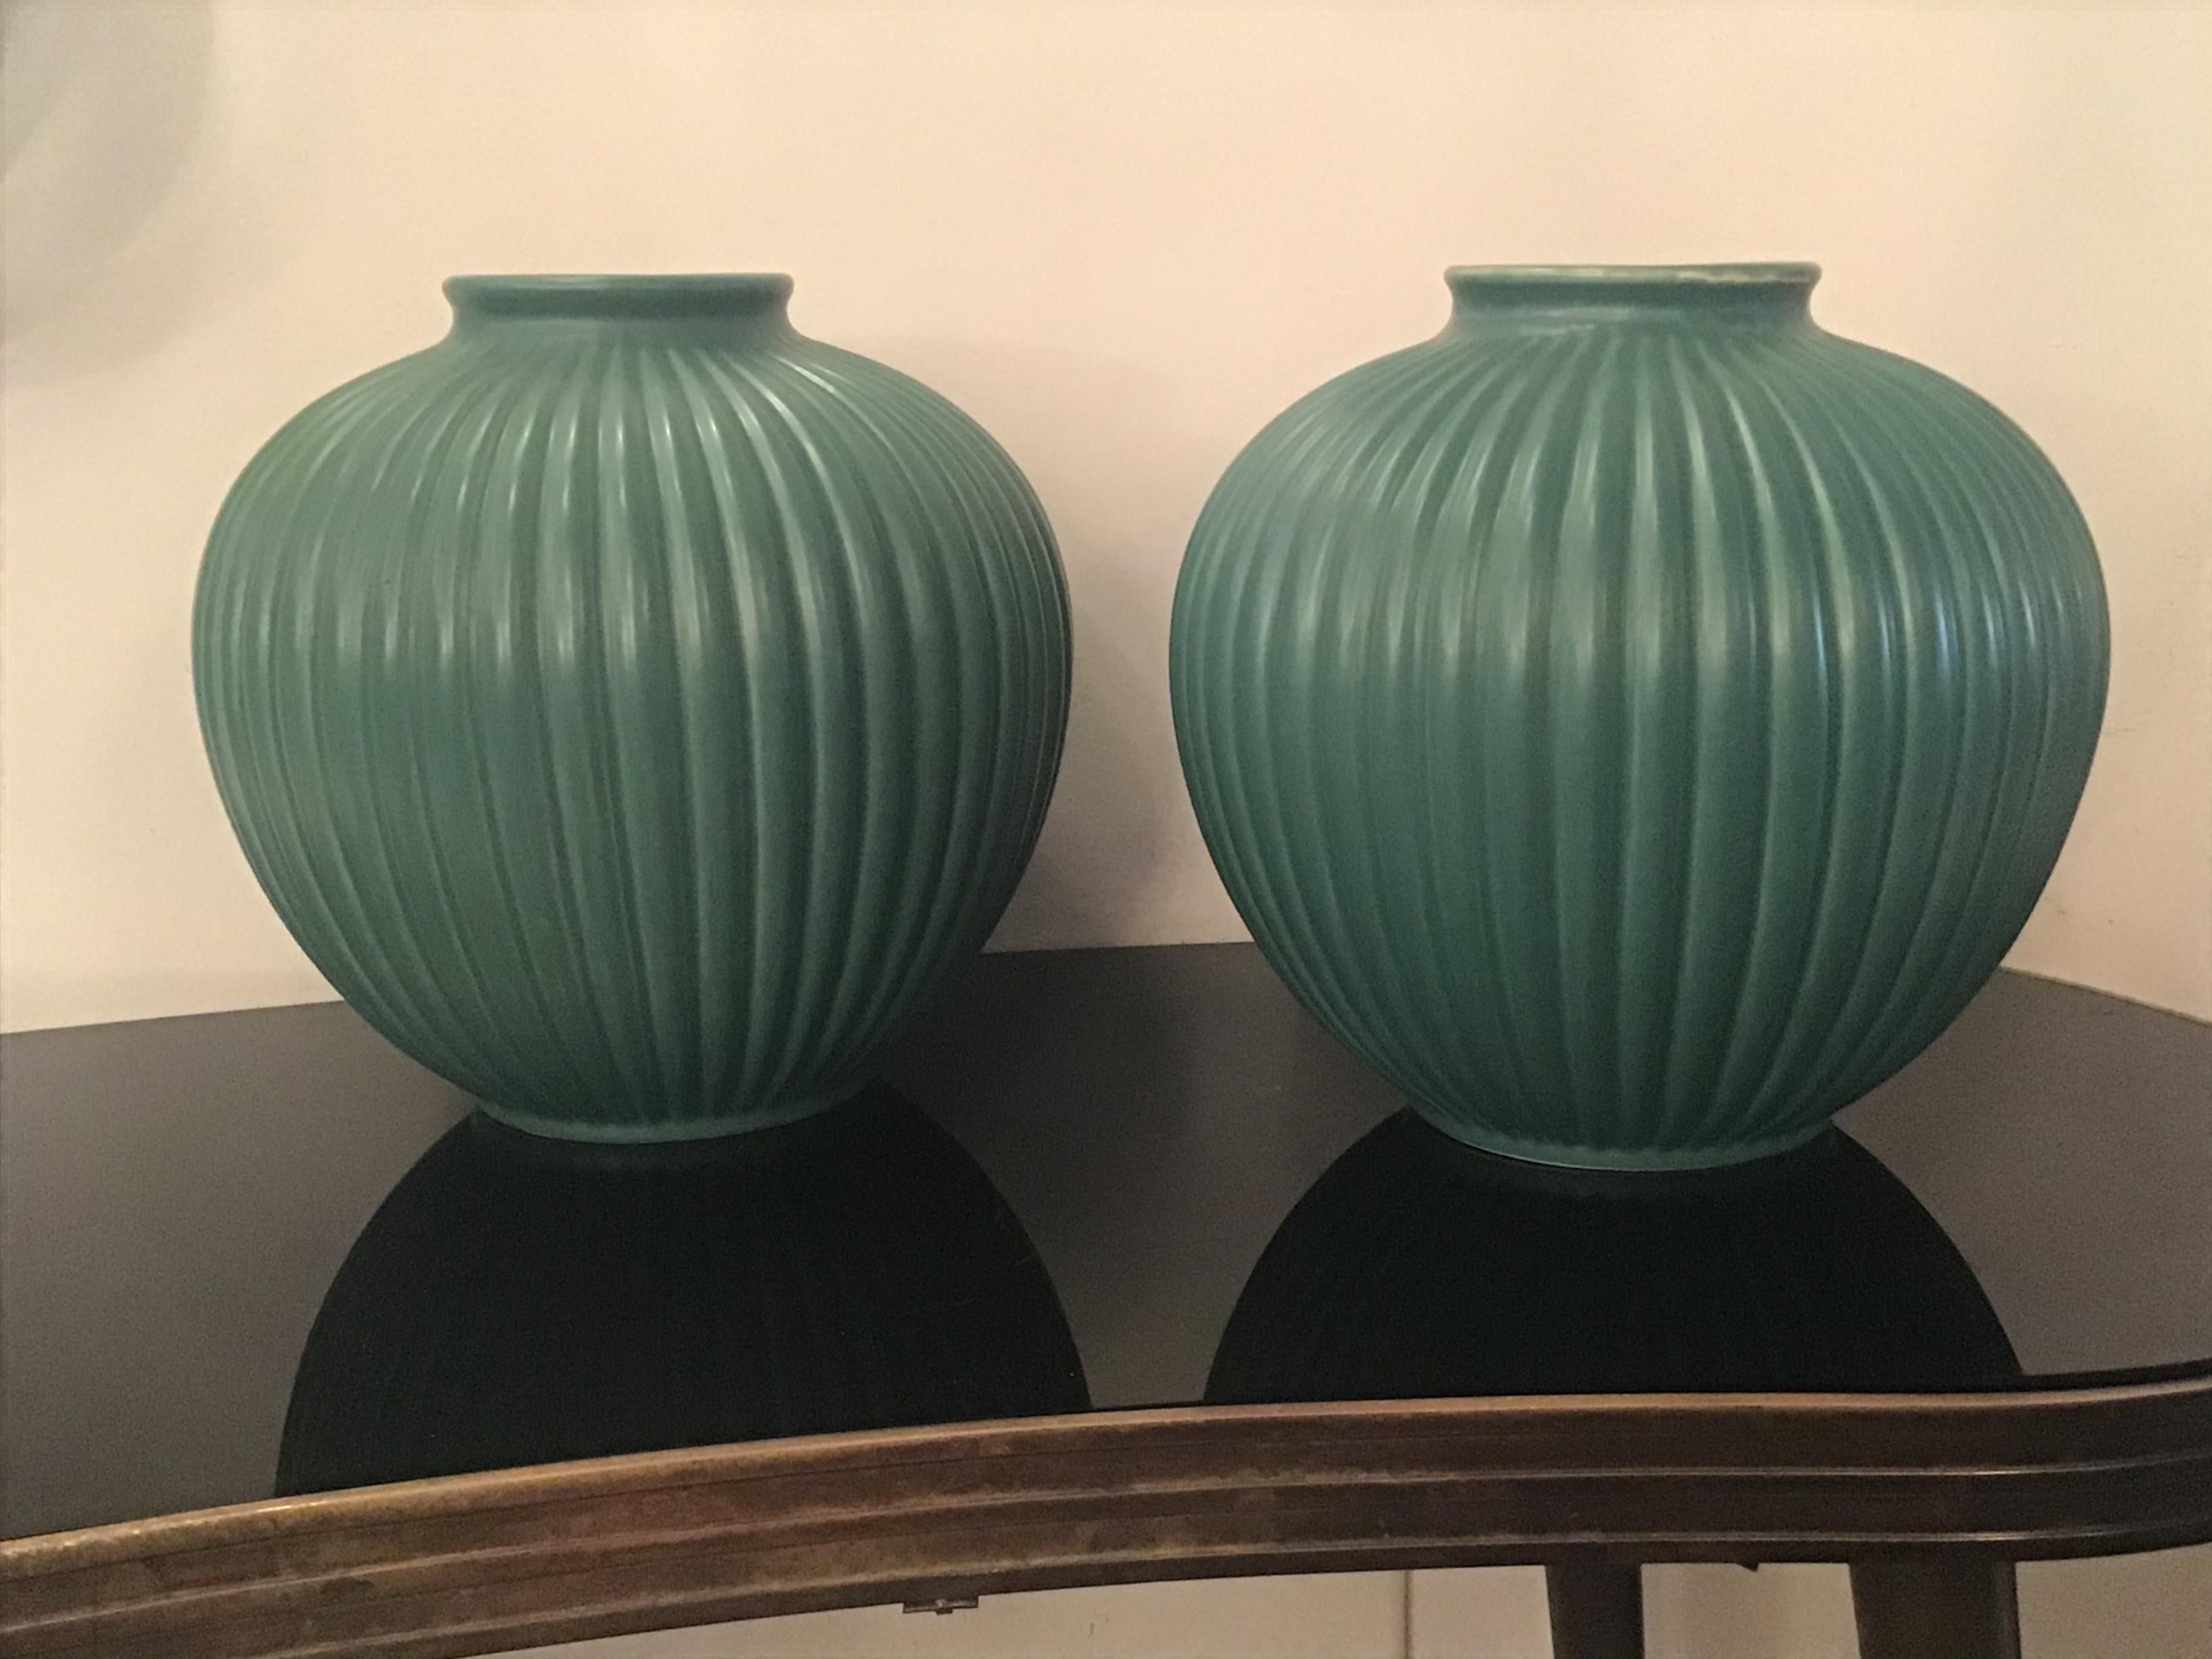 Richard Ginori Giovanni Gariboldi Pair of Vases Green Ceramic 1950 Italy For Sale 11